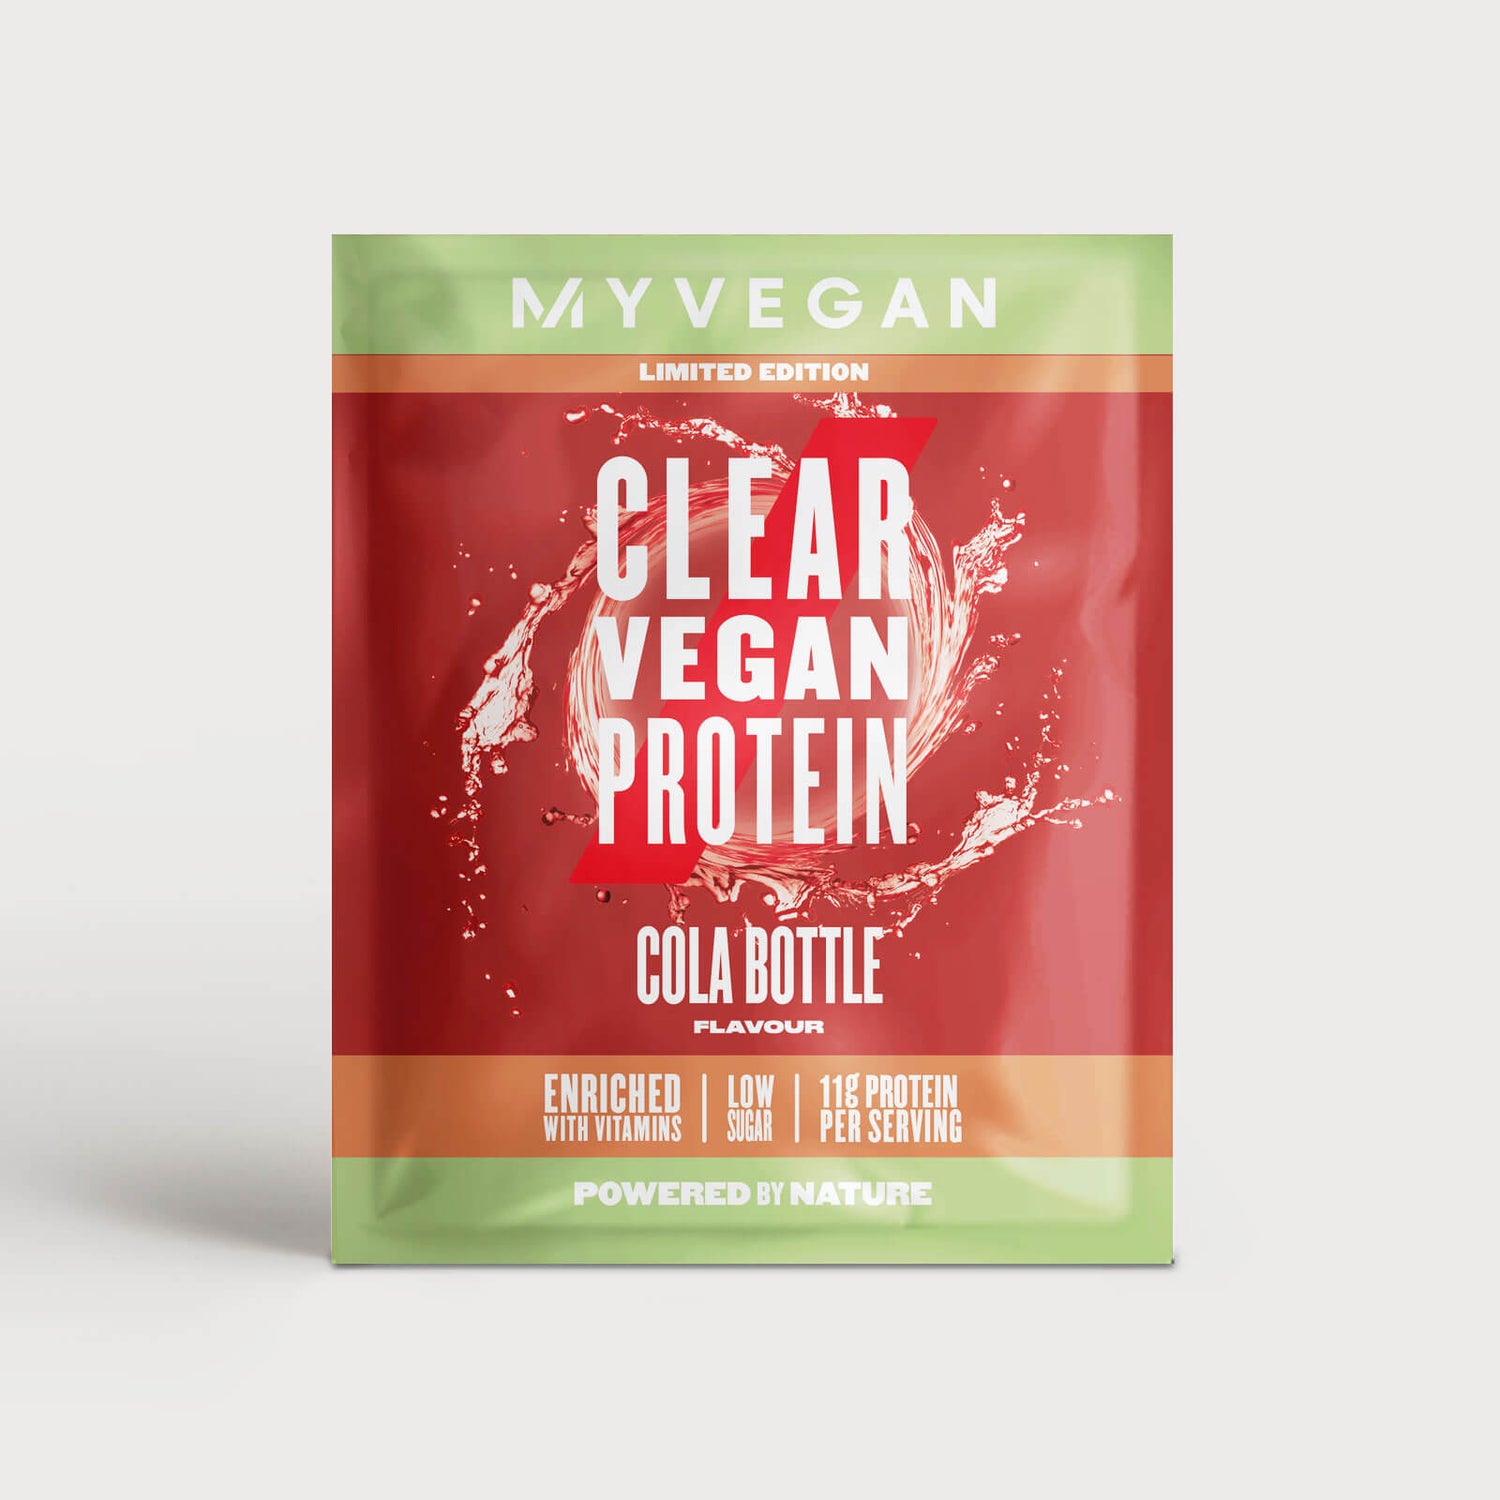 Nápoj Clear Vegan Protein (vzorka) - 15g - Cola Bottle